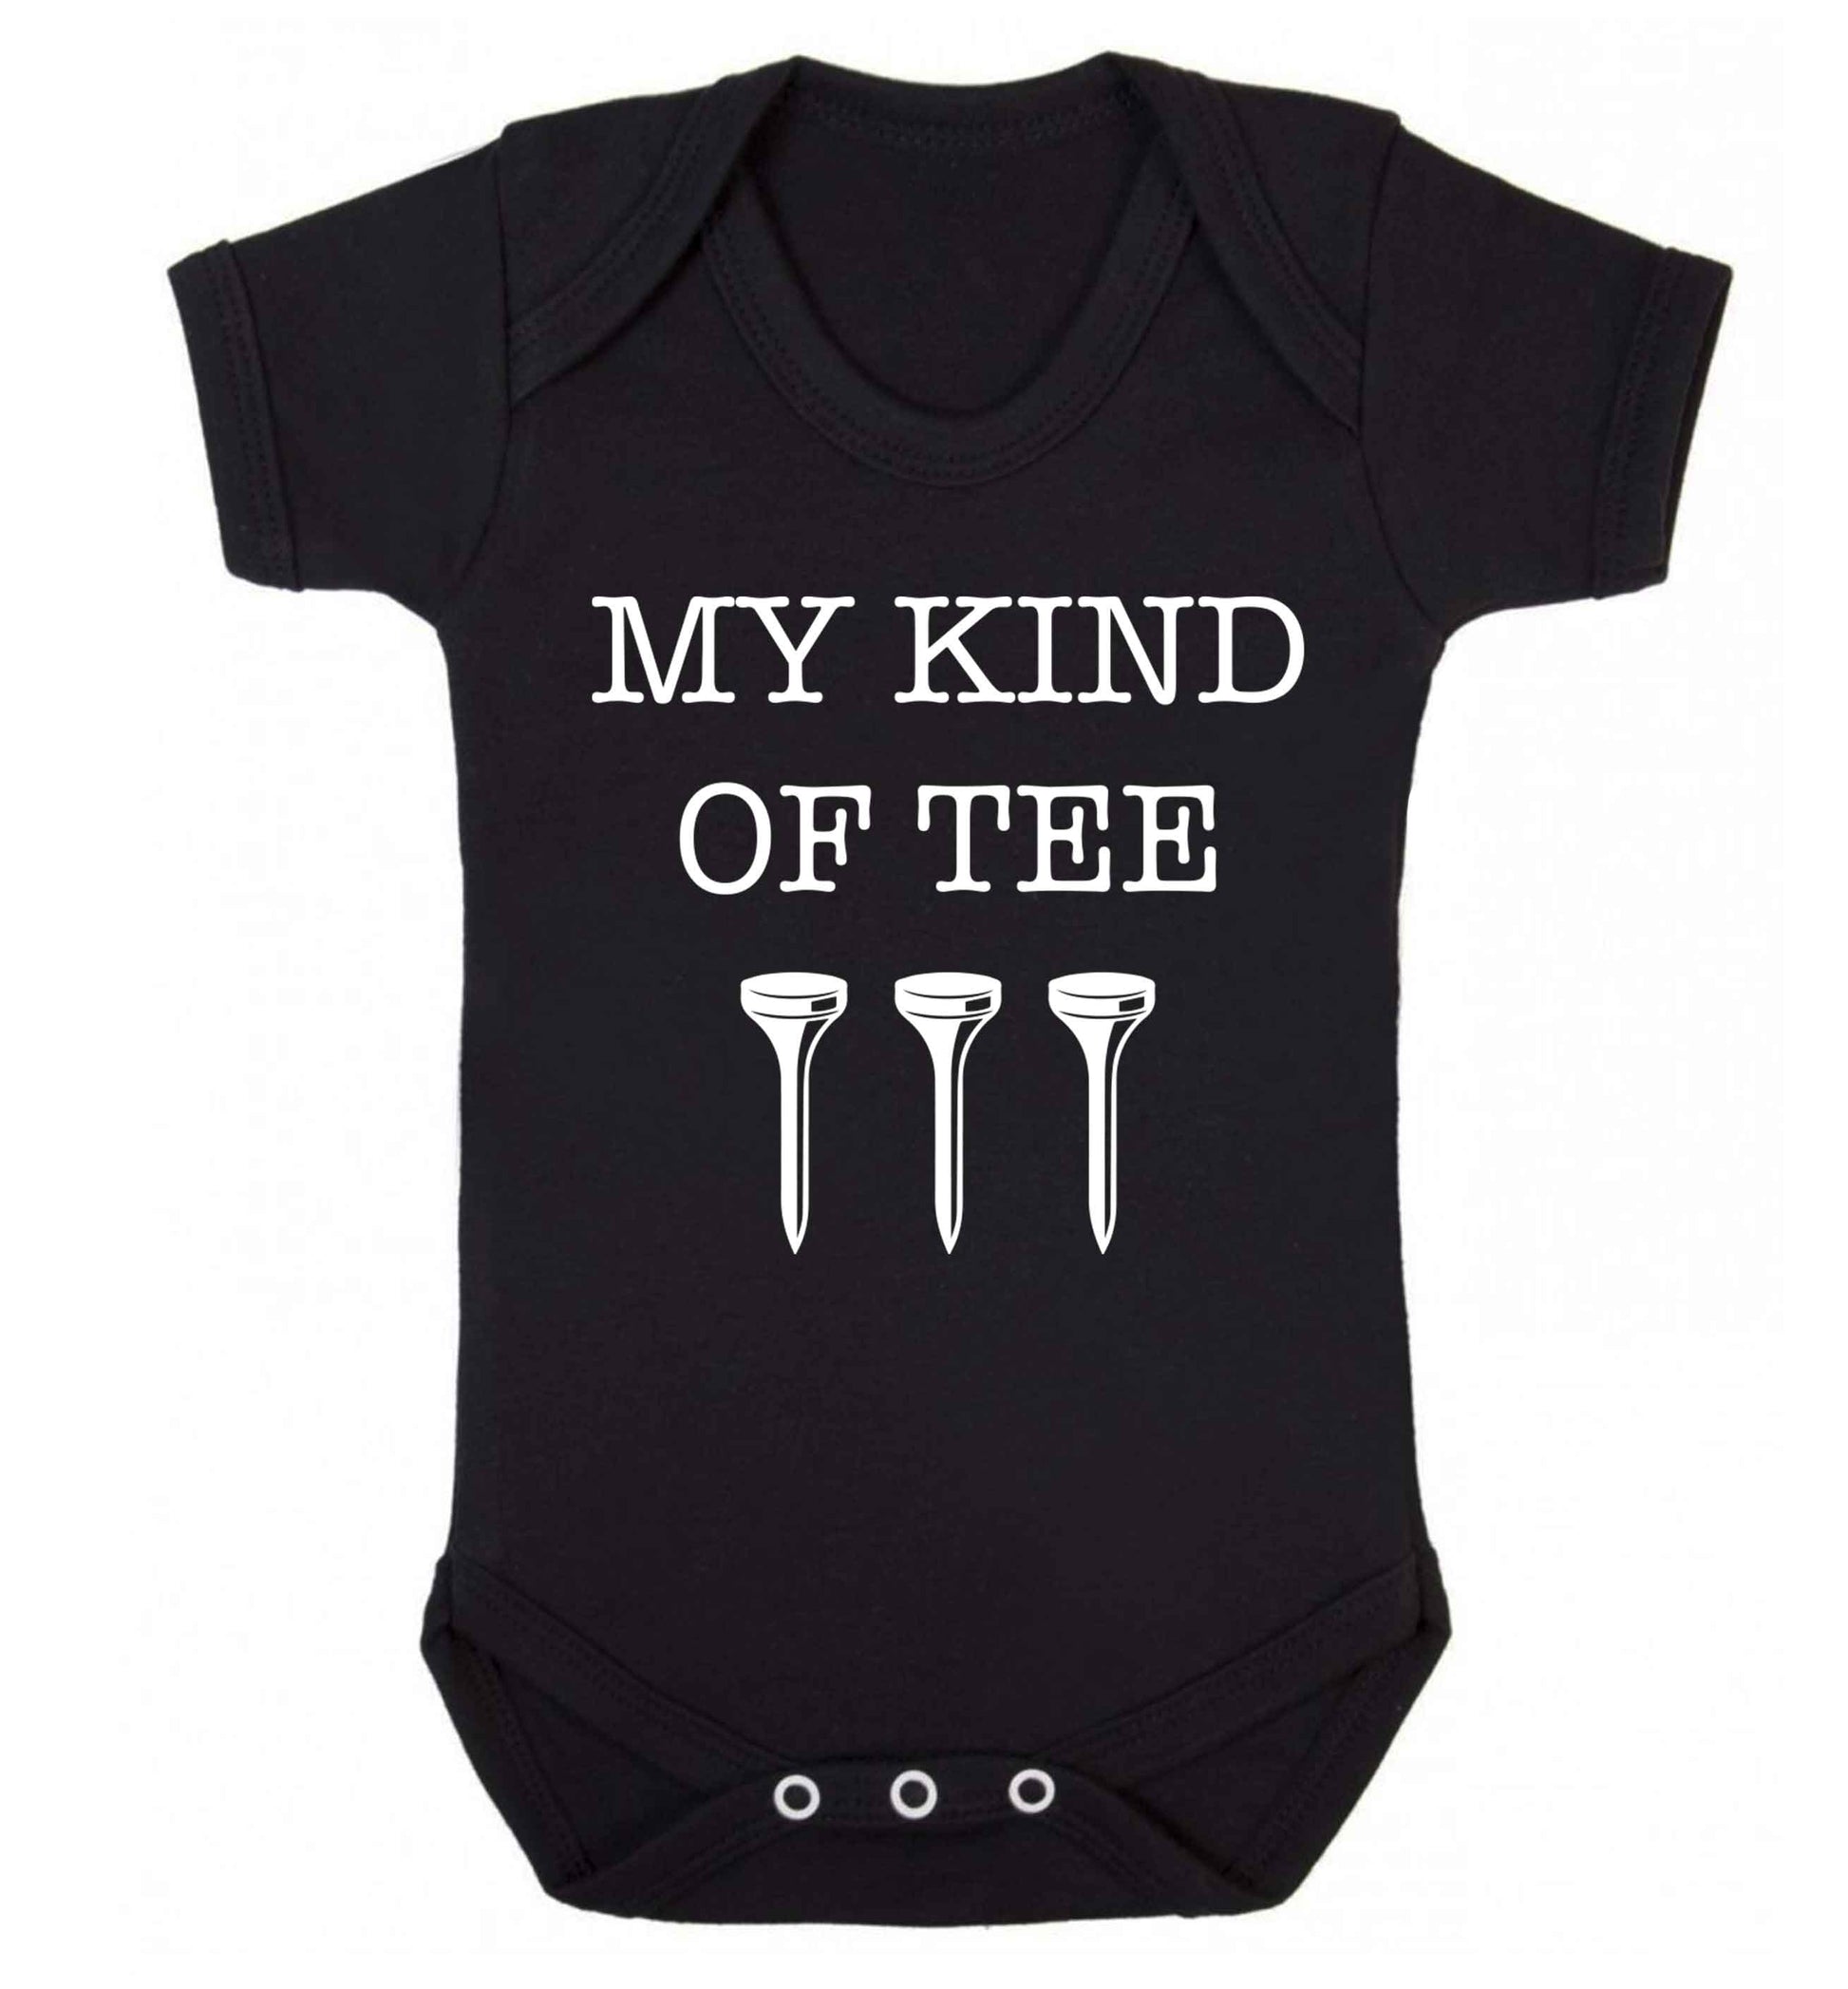 My kind of tee Baby Vest black 18-24 months